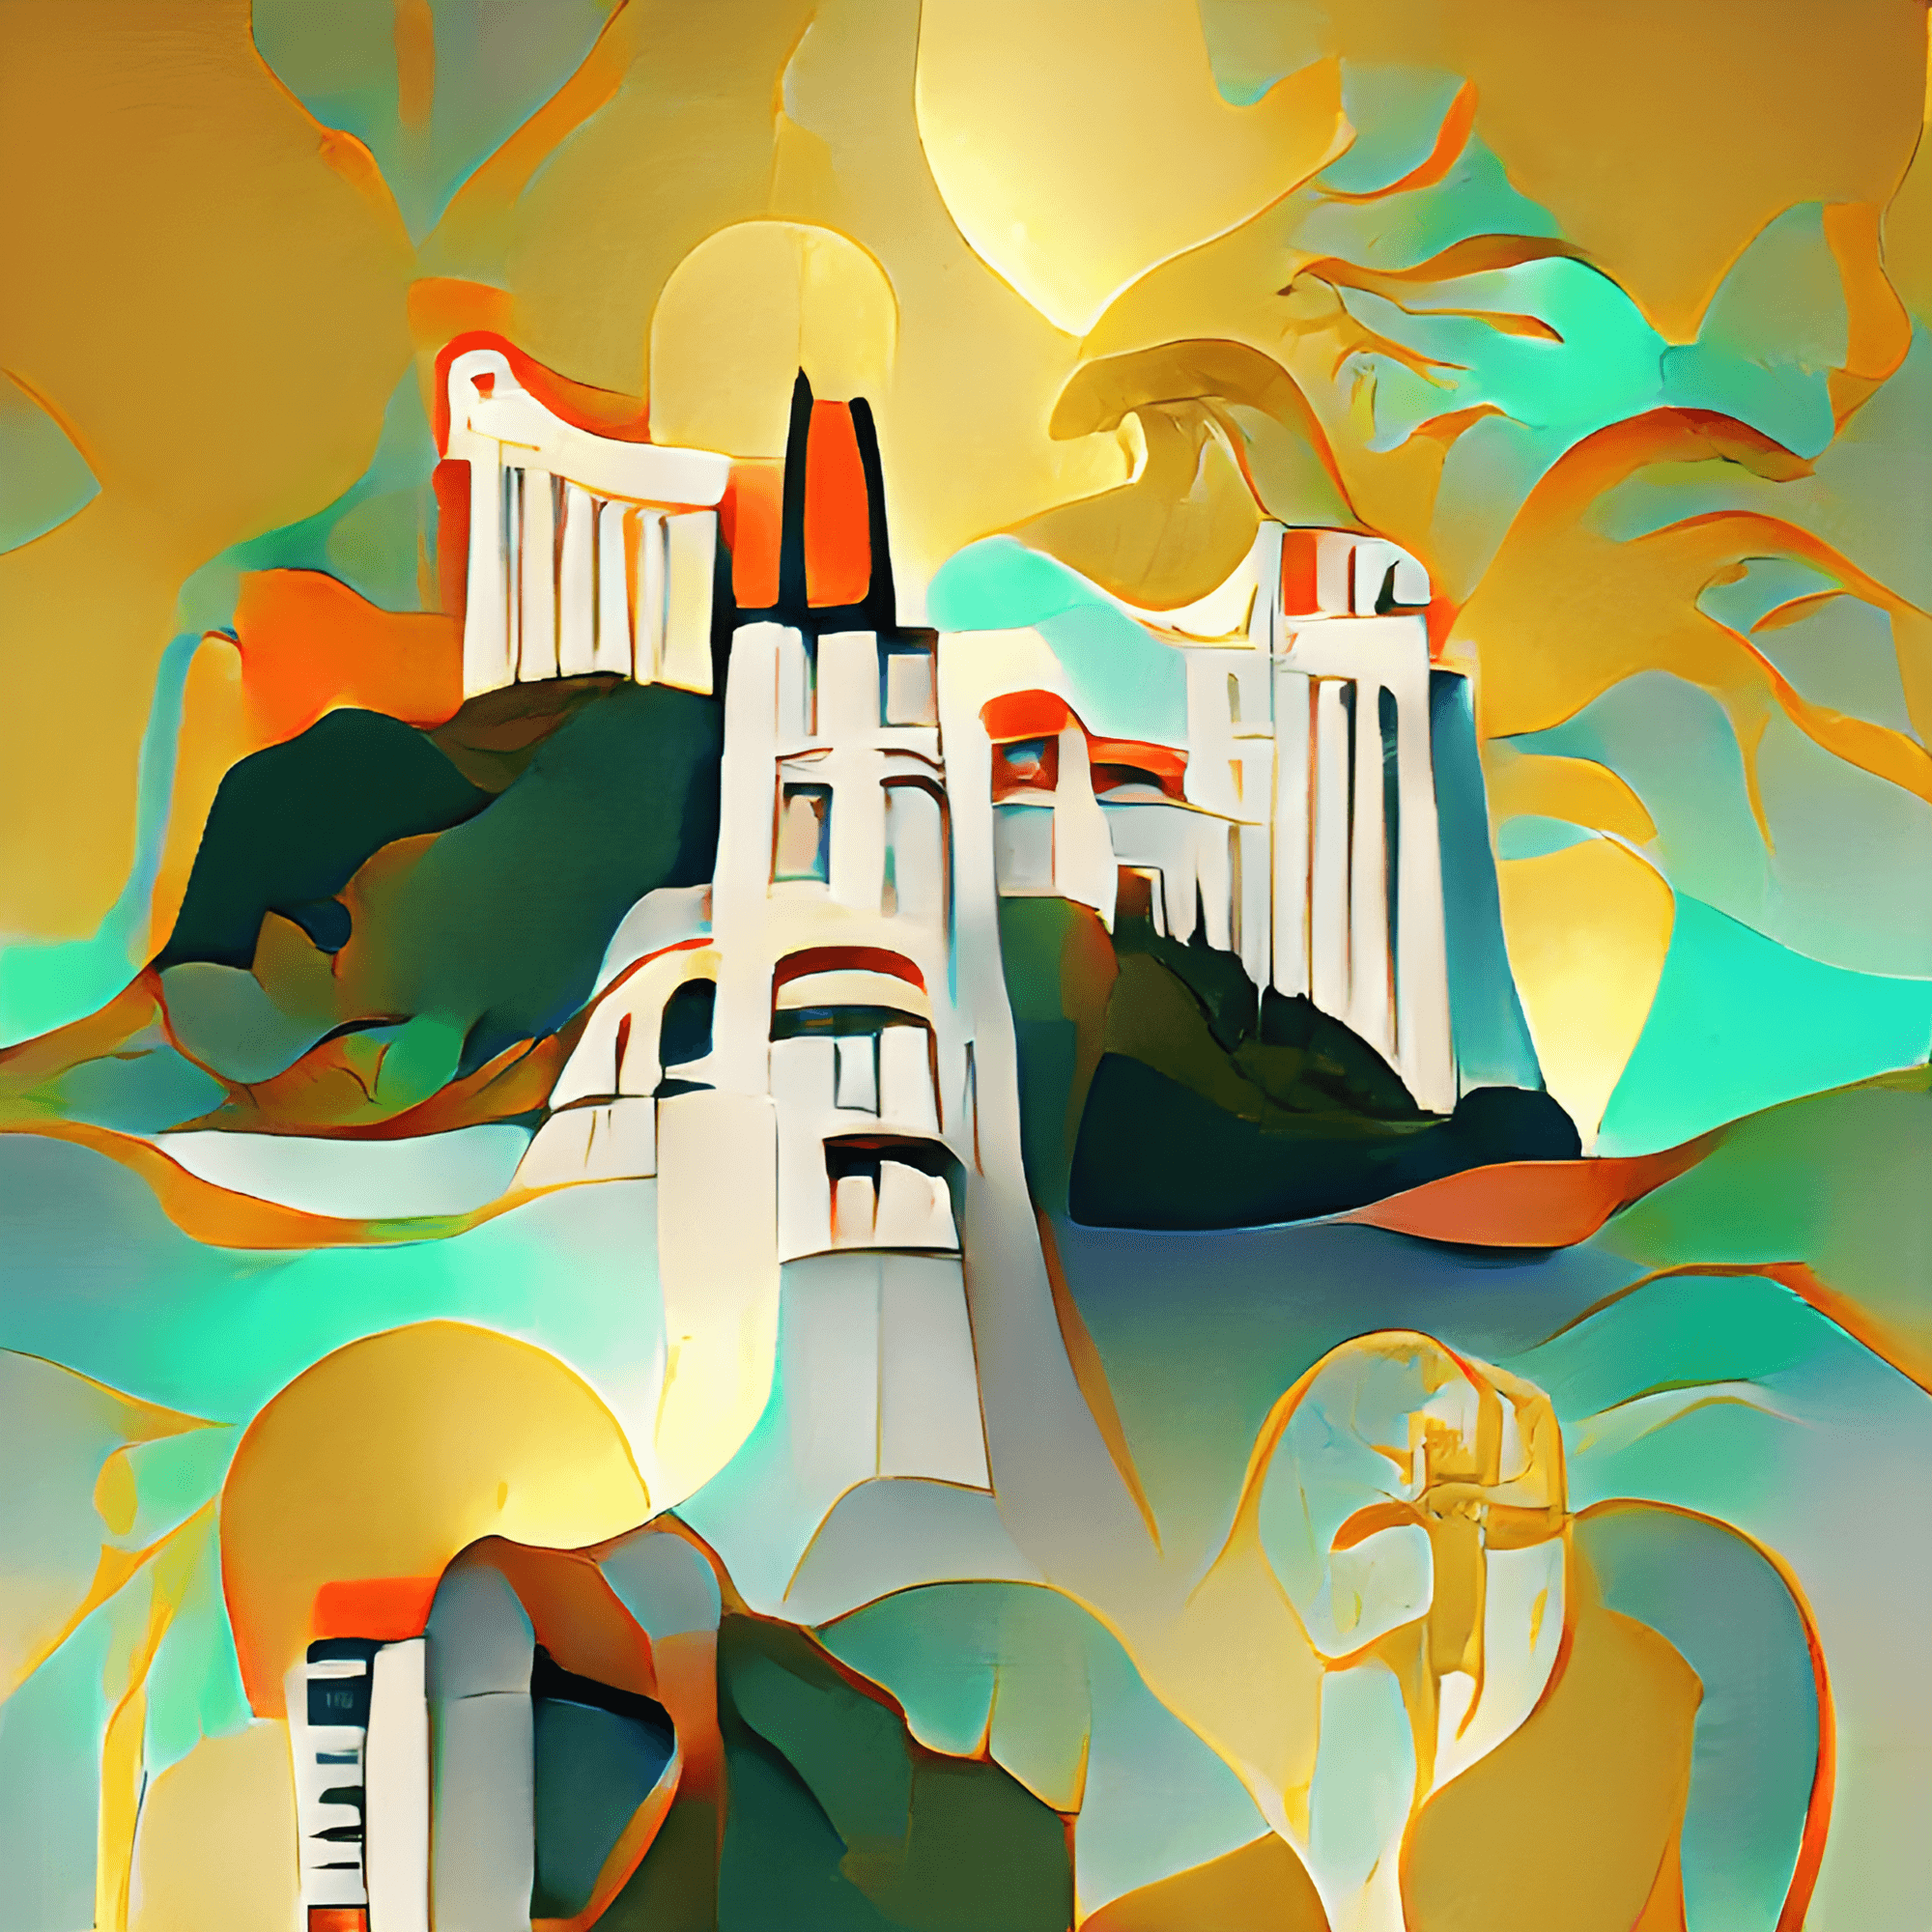 San Fransisco as Fantatsy Land